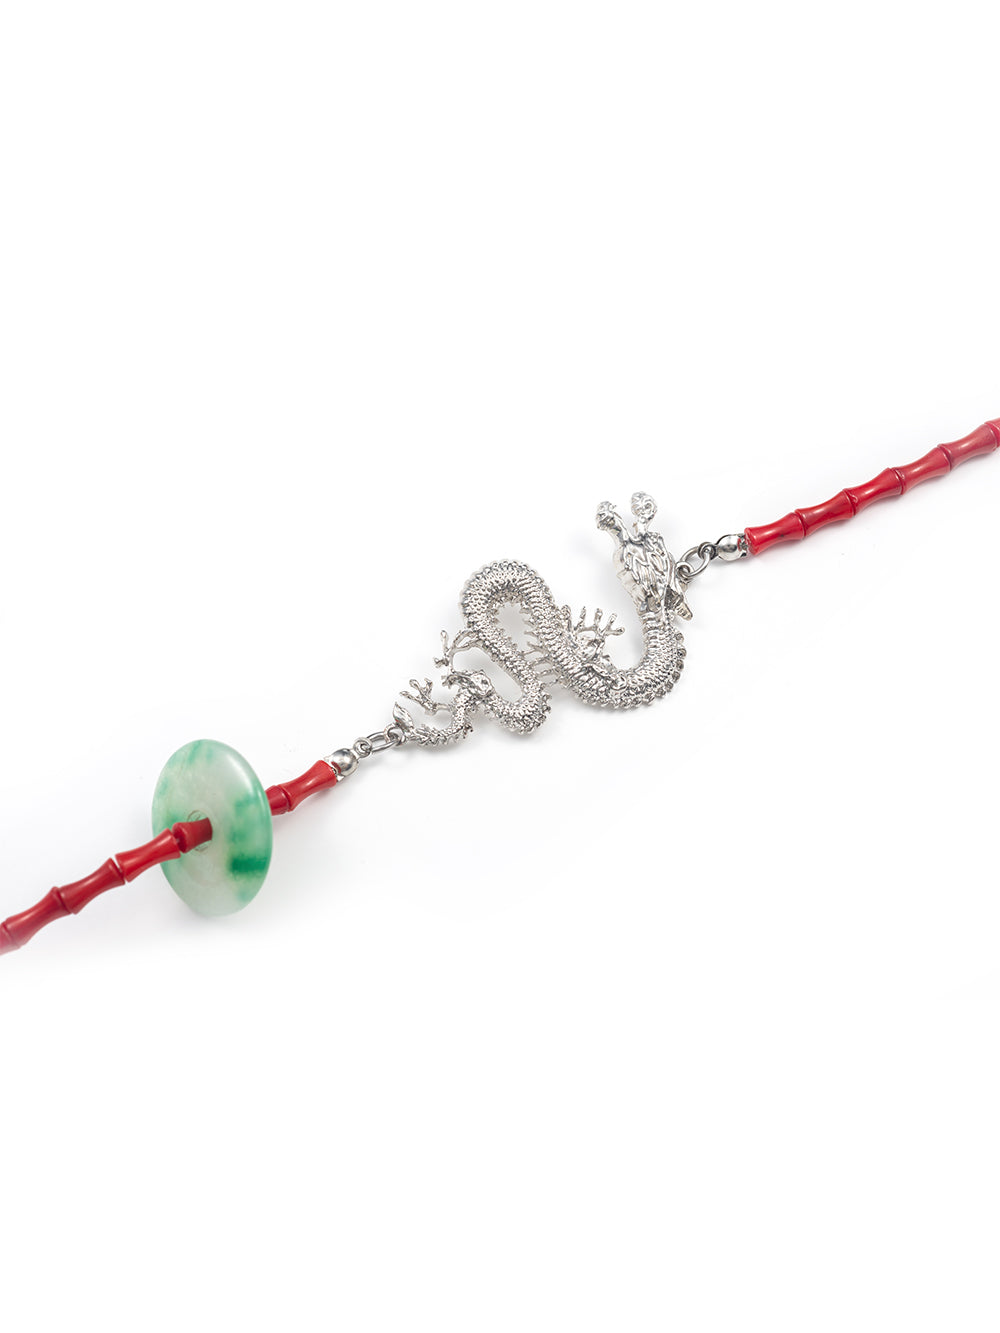 MUKTANK×BLUE VASE Red Jade Necklace